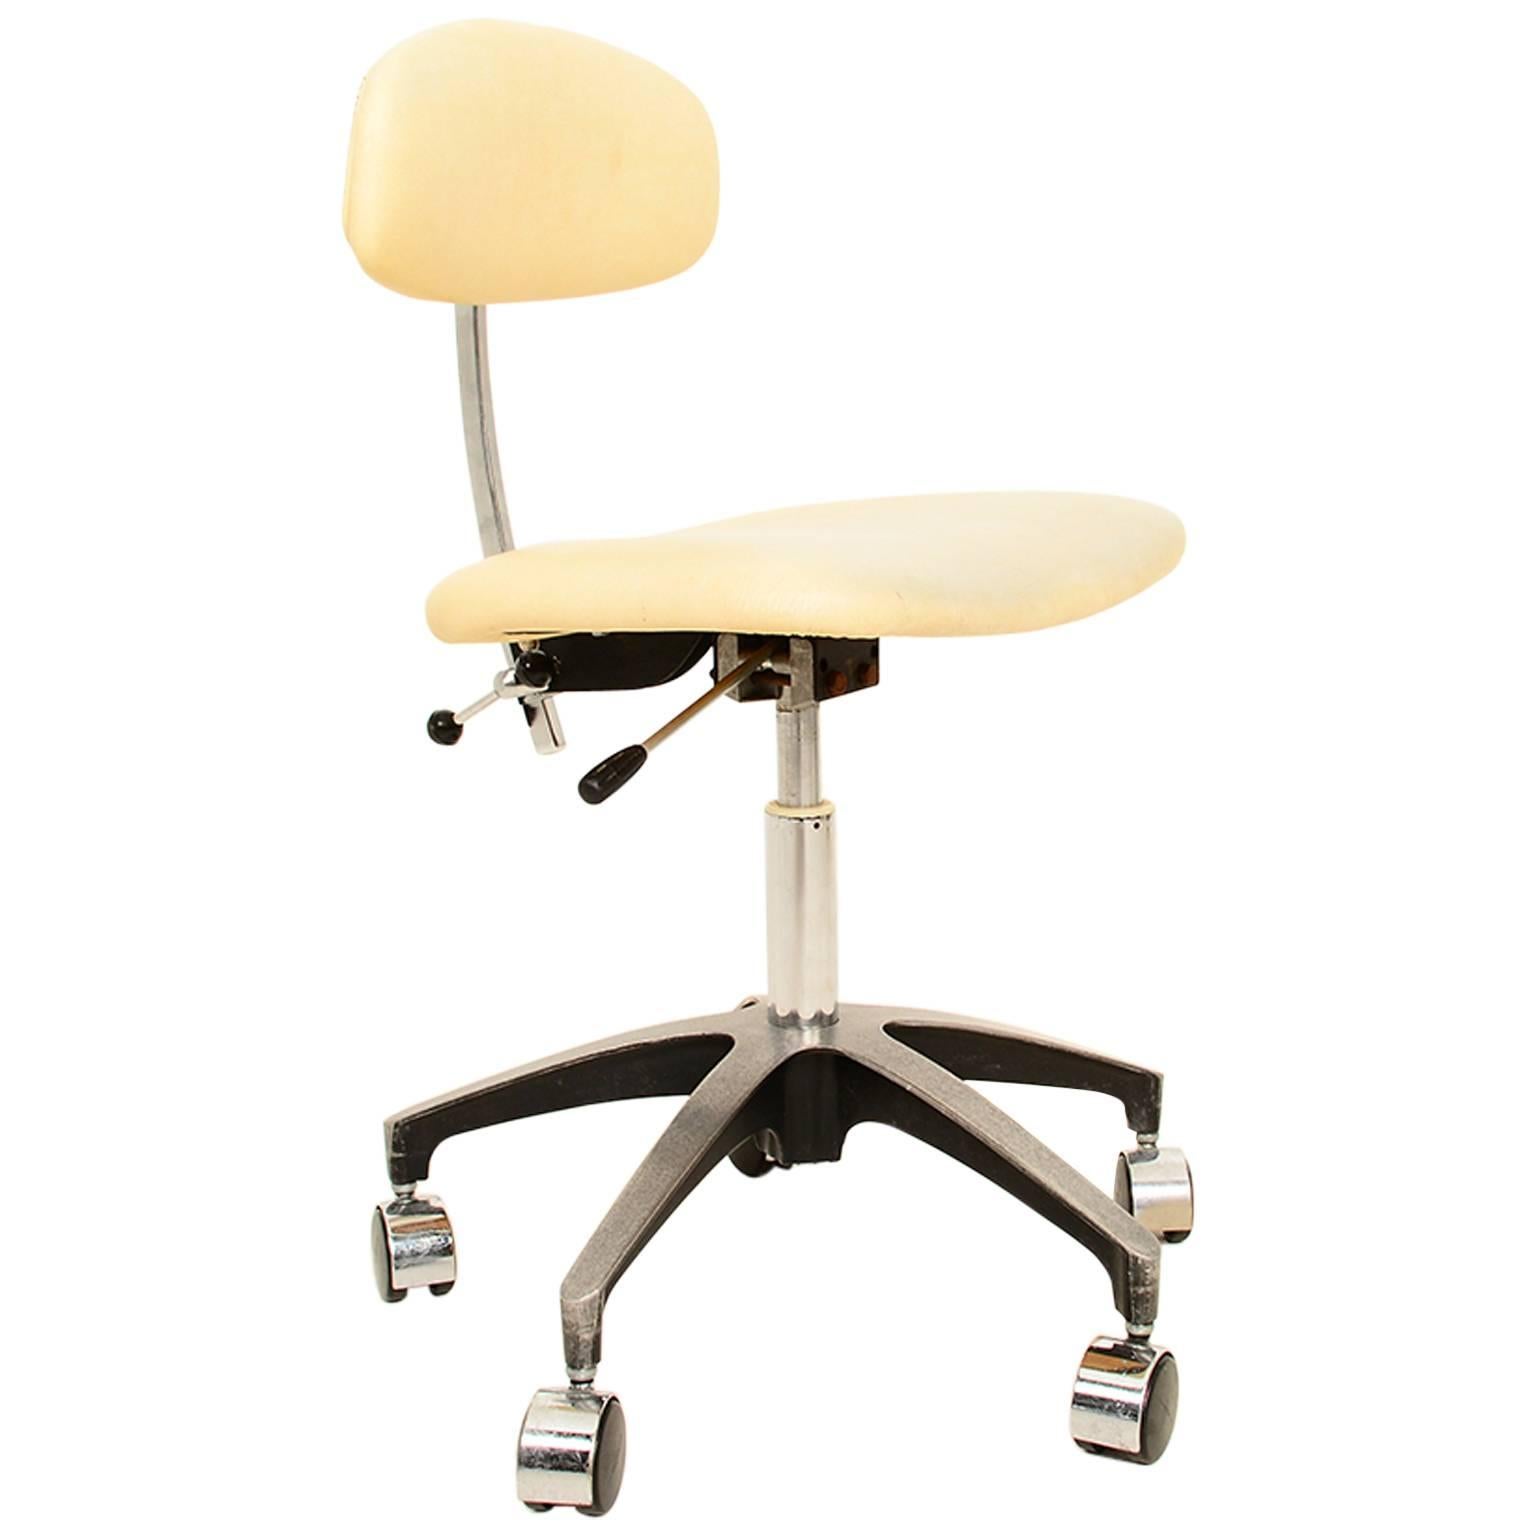 Mid-Century Modern Industrial Office Desk Chair